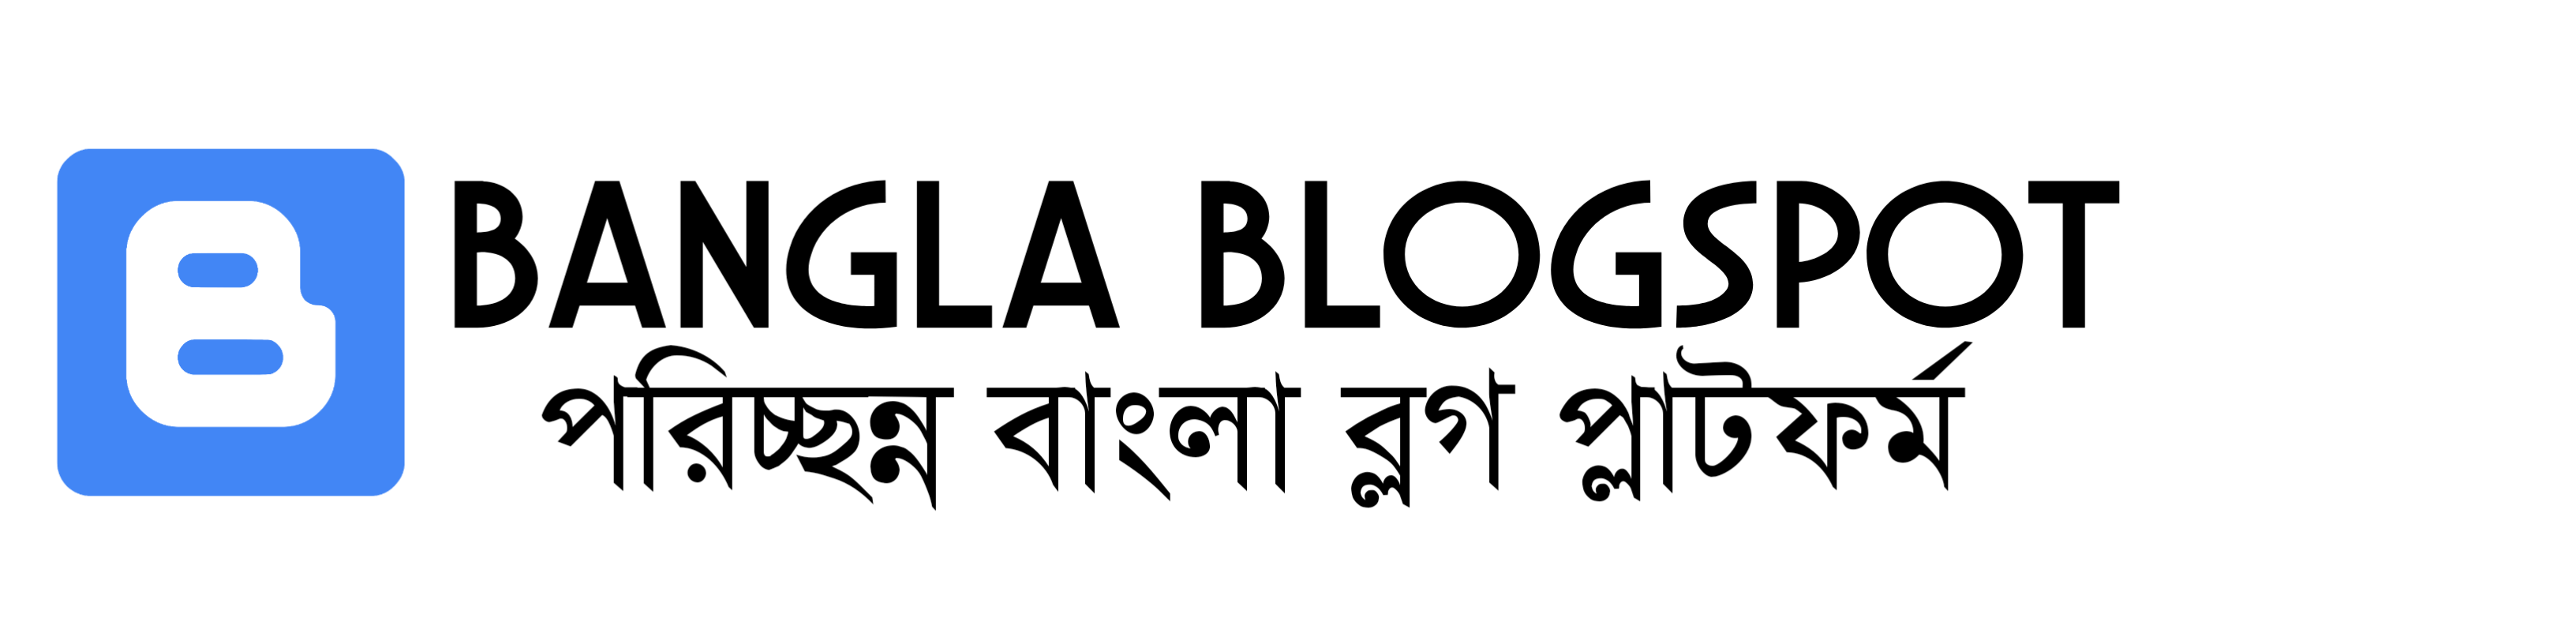 Bangla Blogspot